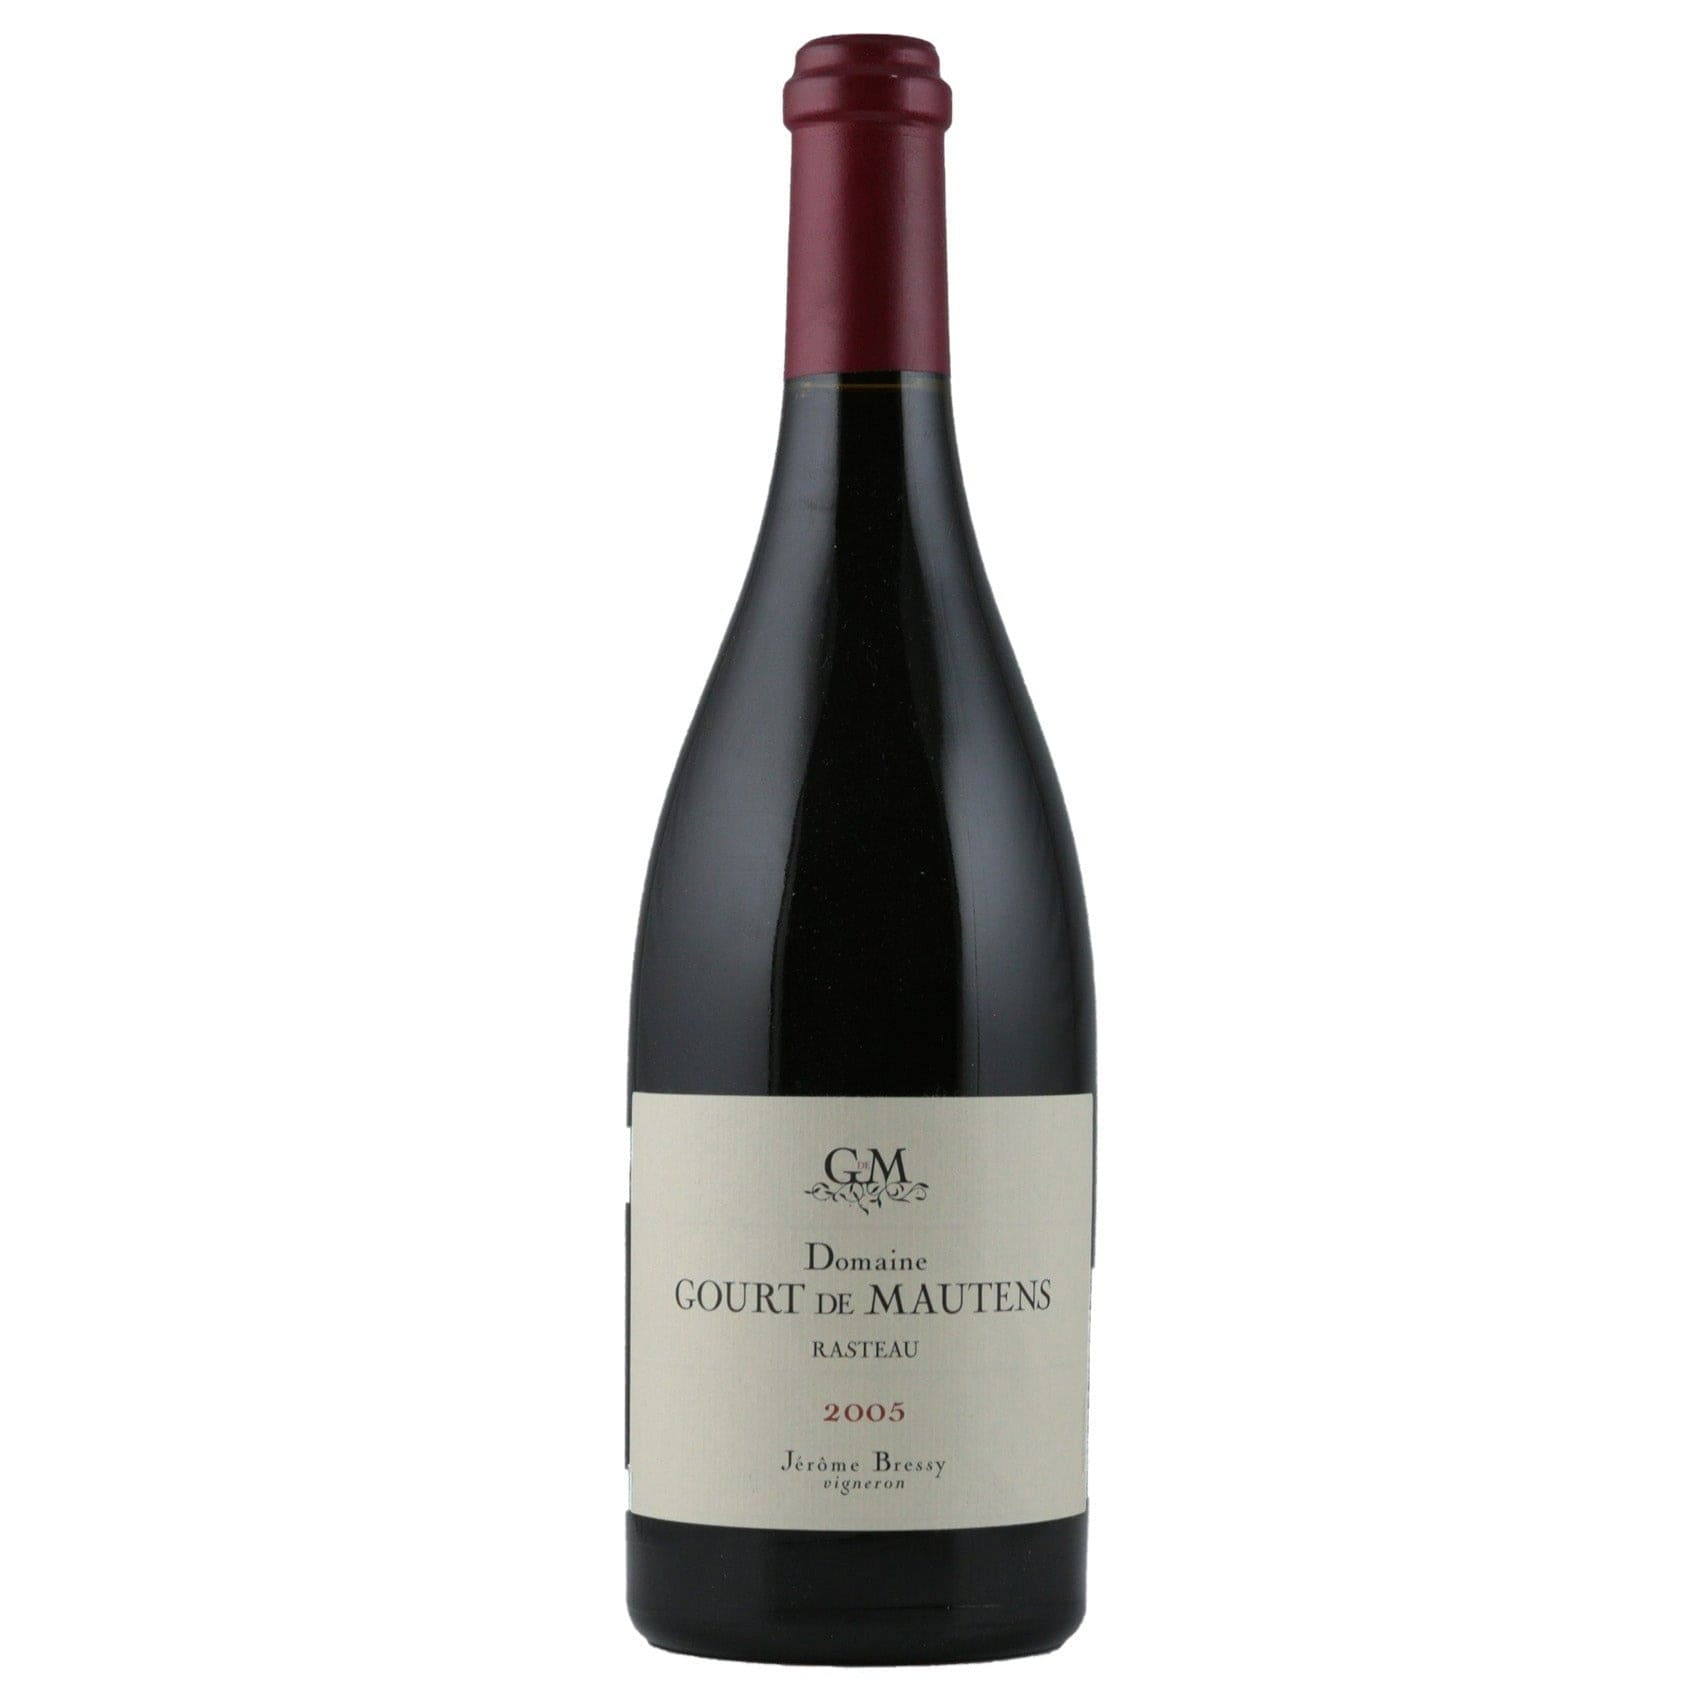 Single bottle of Red wine Domaine Gourt de Mautens, Jerome Bressy, Rasteau, 2005 Grenache, Carignan, Syrah & Mourvedre